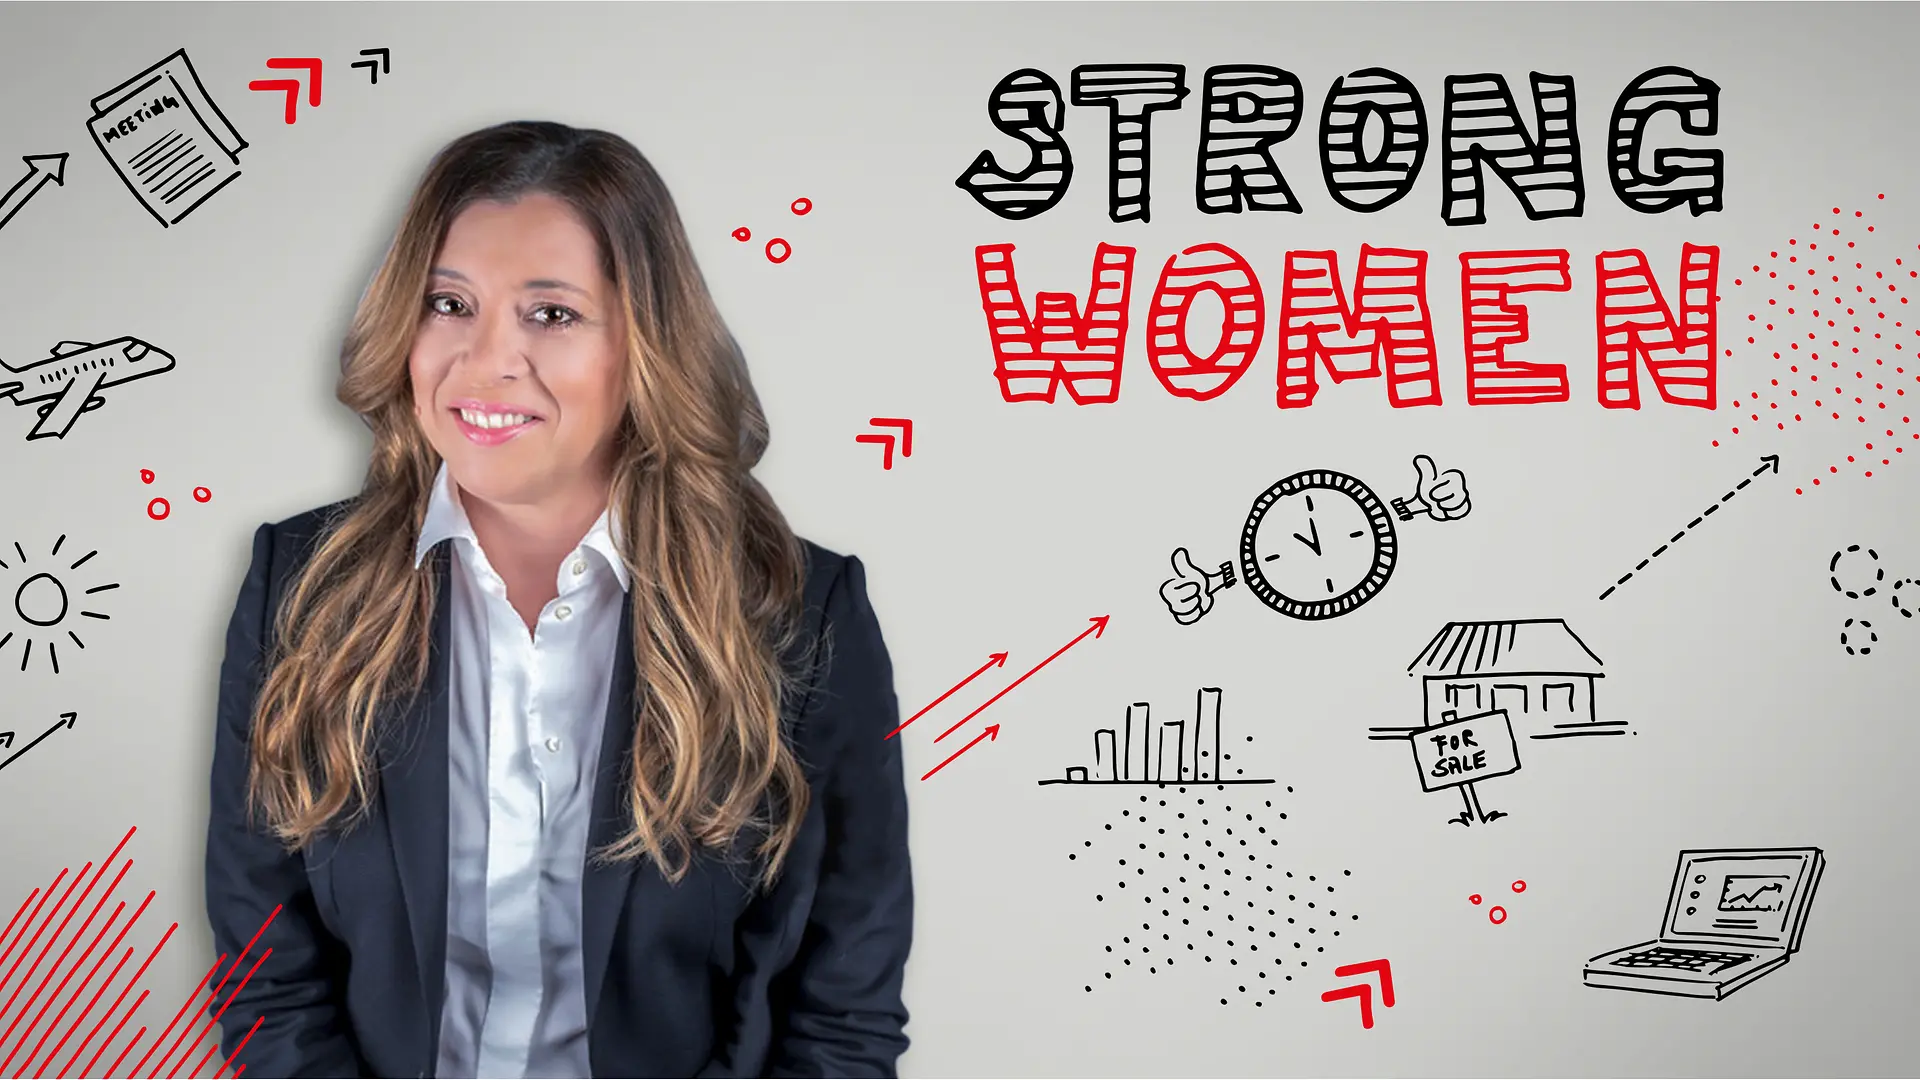 Strong women: Veronica Dohm